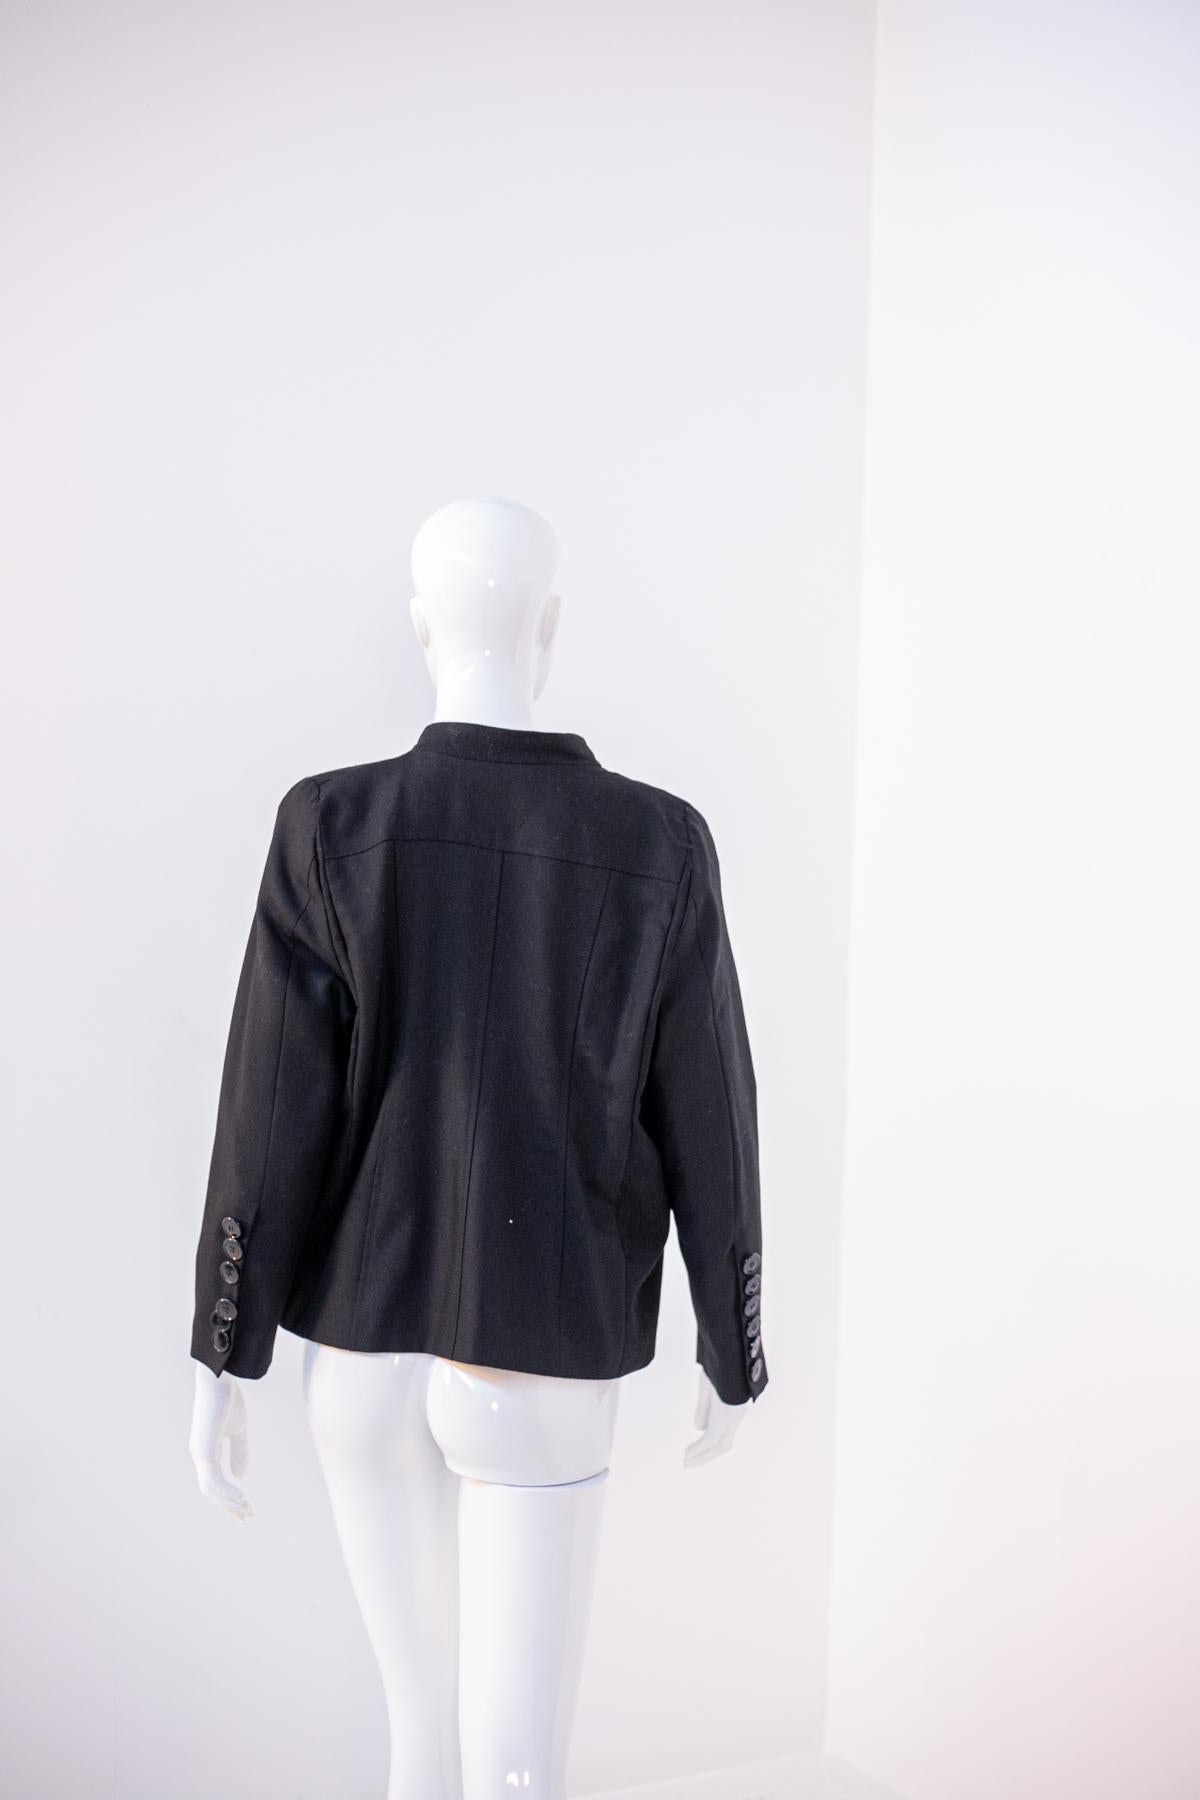 Gai Mattiolo Jeans Black Wool Jacket For Sale 3